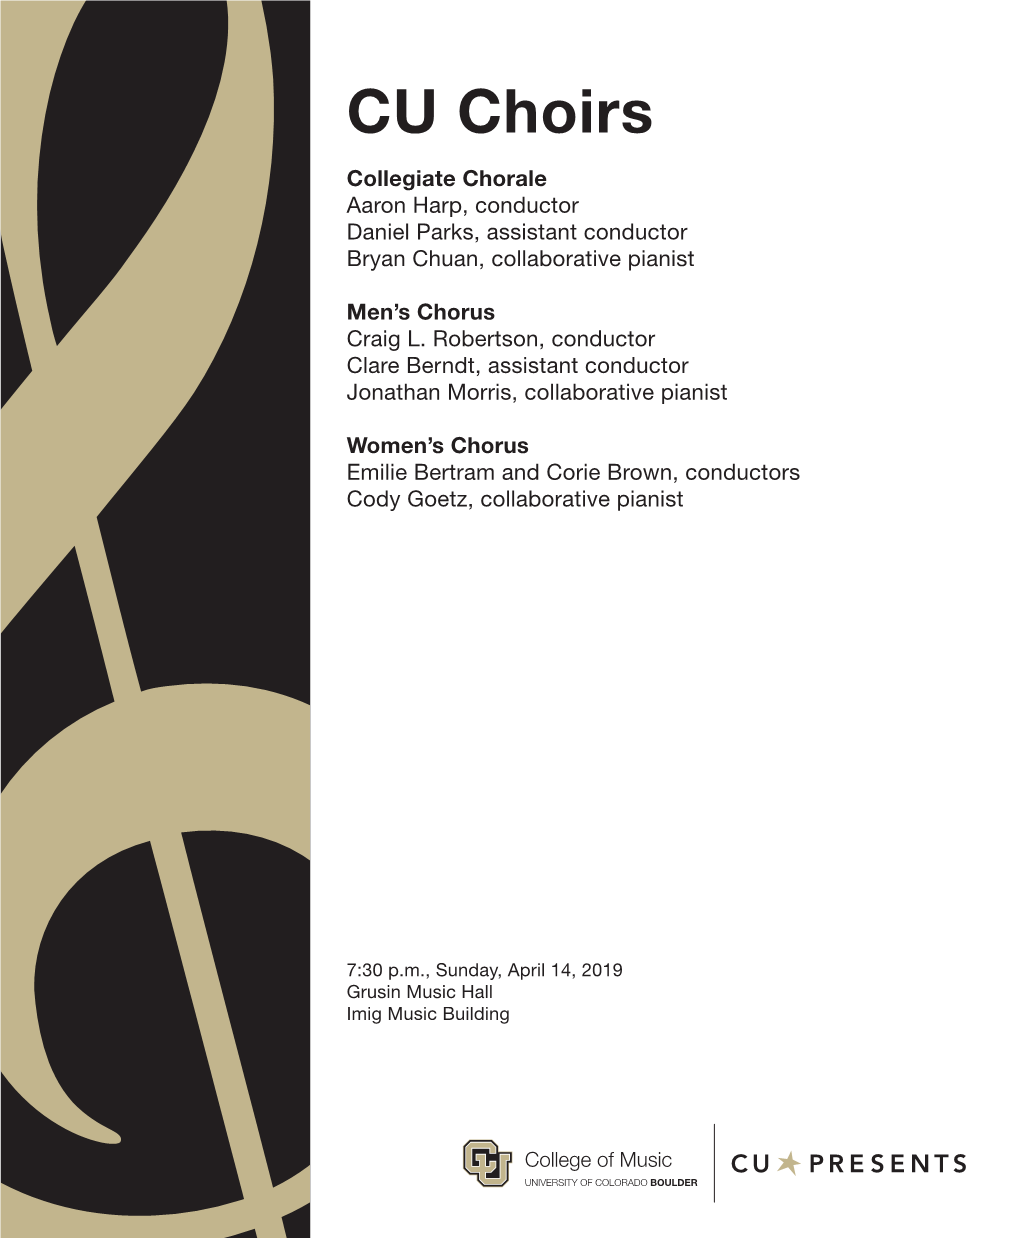 CU Choirs Collegiate Chorale Aaron Harp, Conductor Daniel Parks, Assistant Conductor Bryan Chuan, Collaborative Pianist